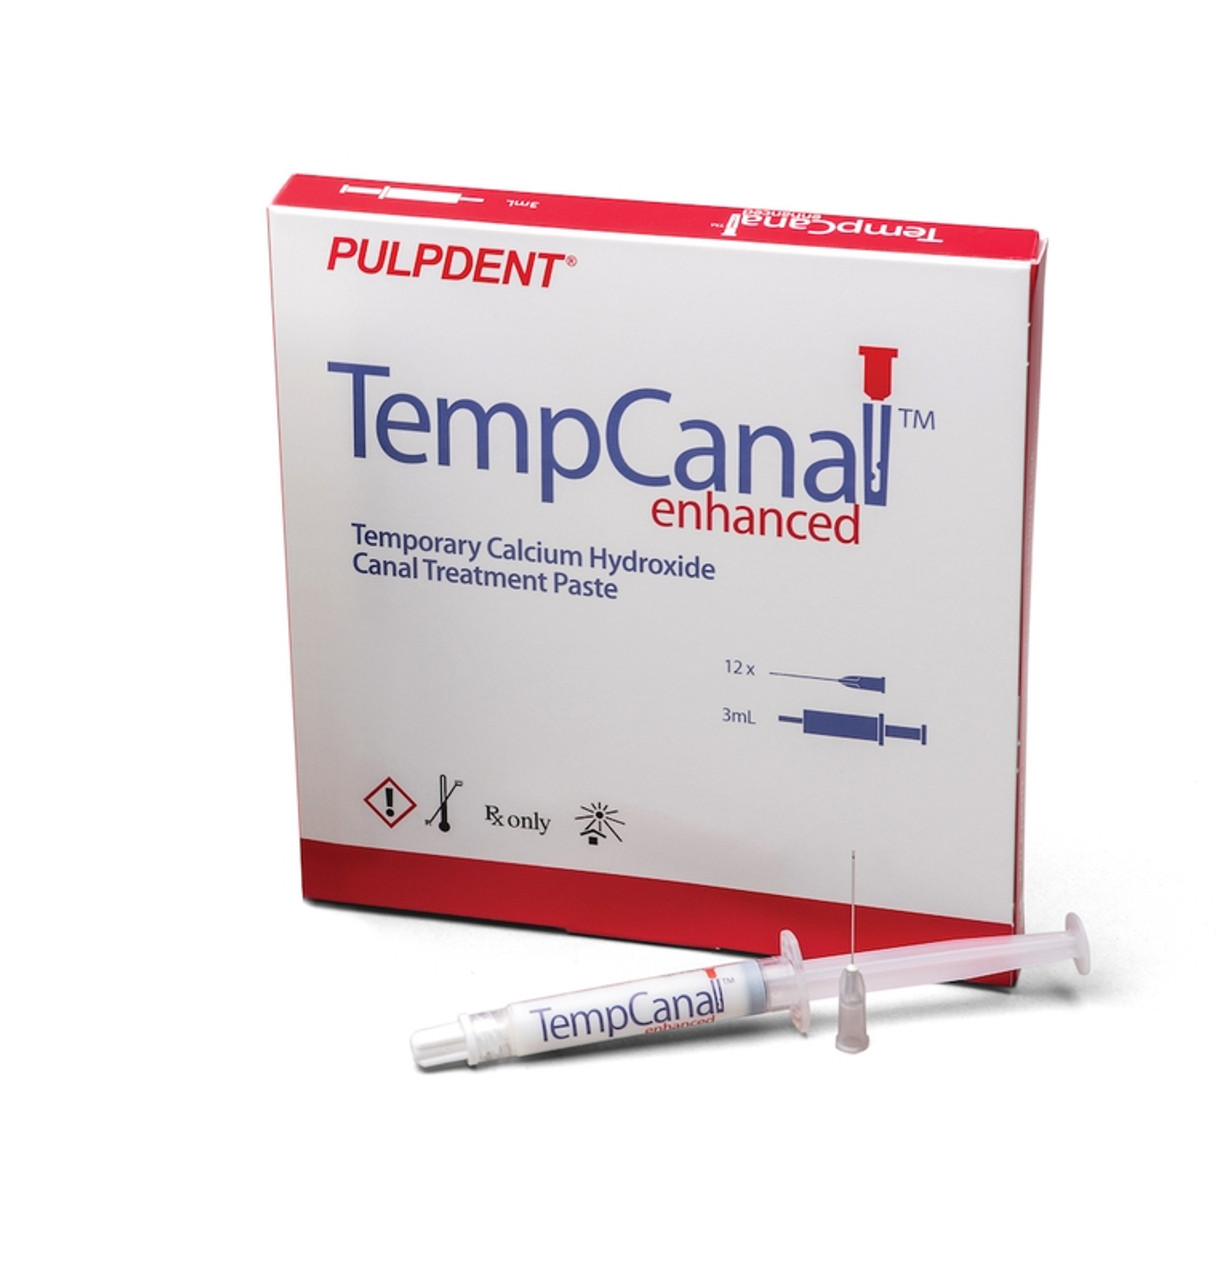 PULPDENT TEMPCANAL ENHANCED CALCIUM HYDROXIDE CANAL TREATMENT PASTE, TE4